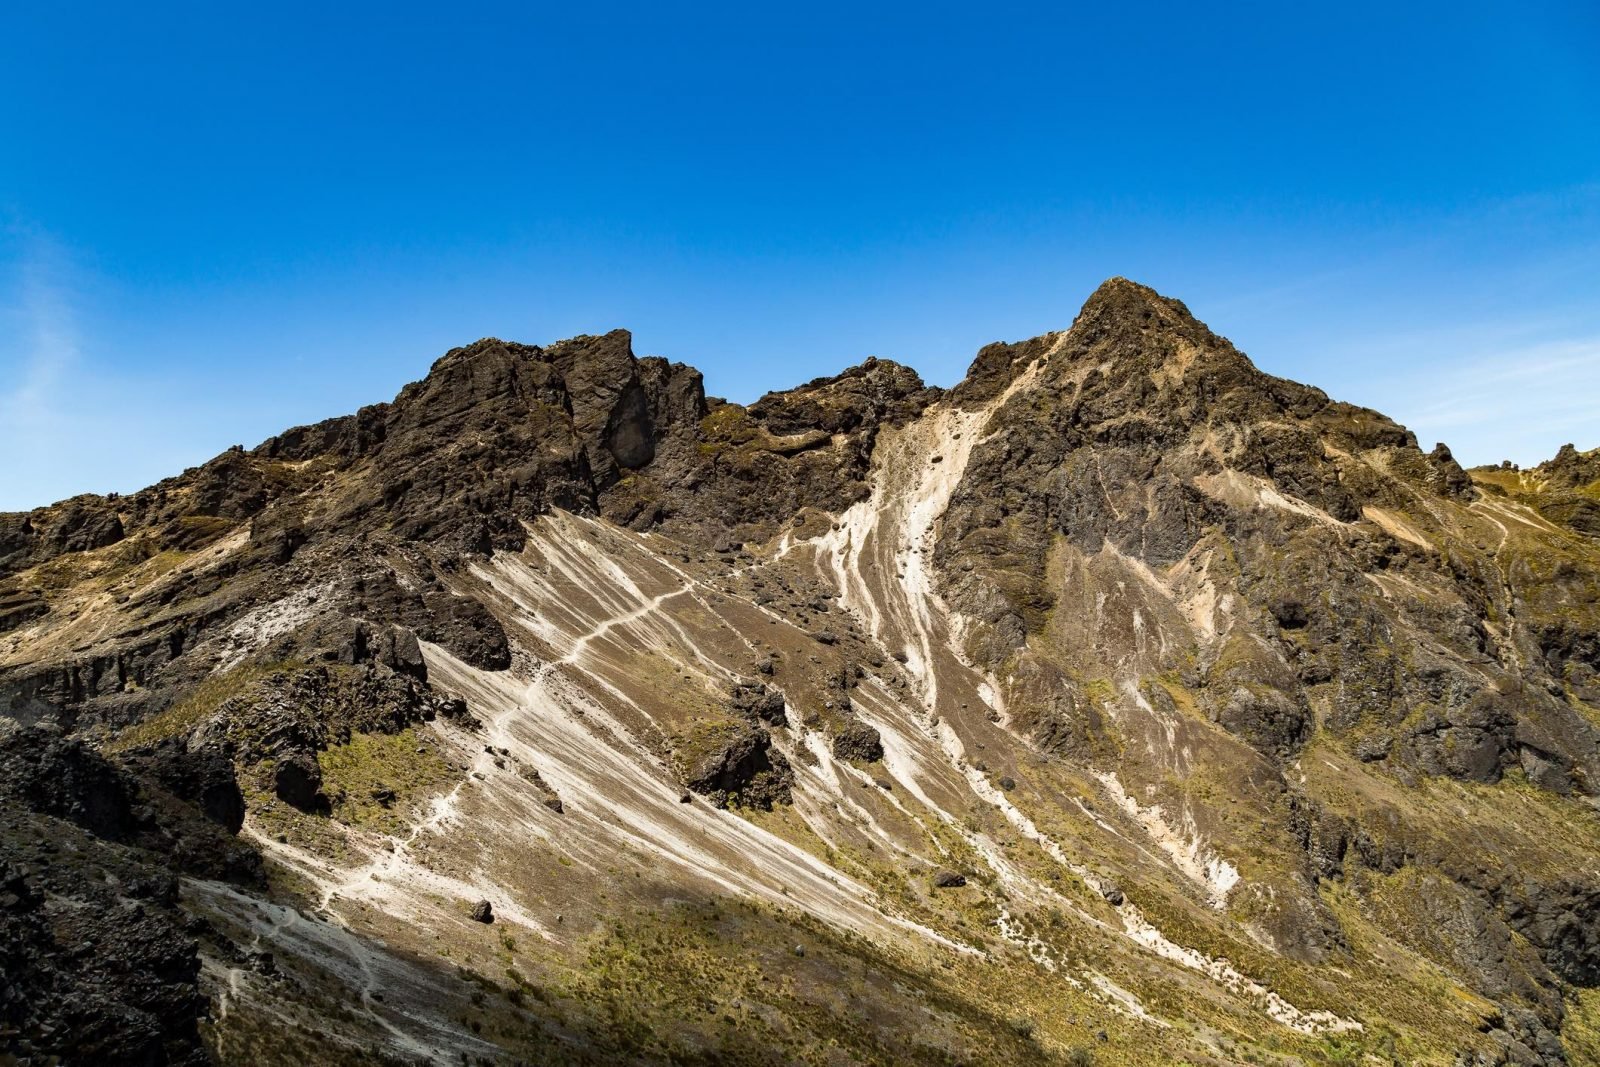 The craggy form of Rucu Pichincha, a stratovolcano near Quito